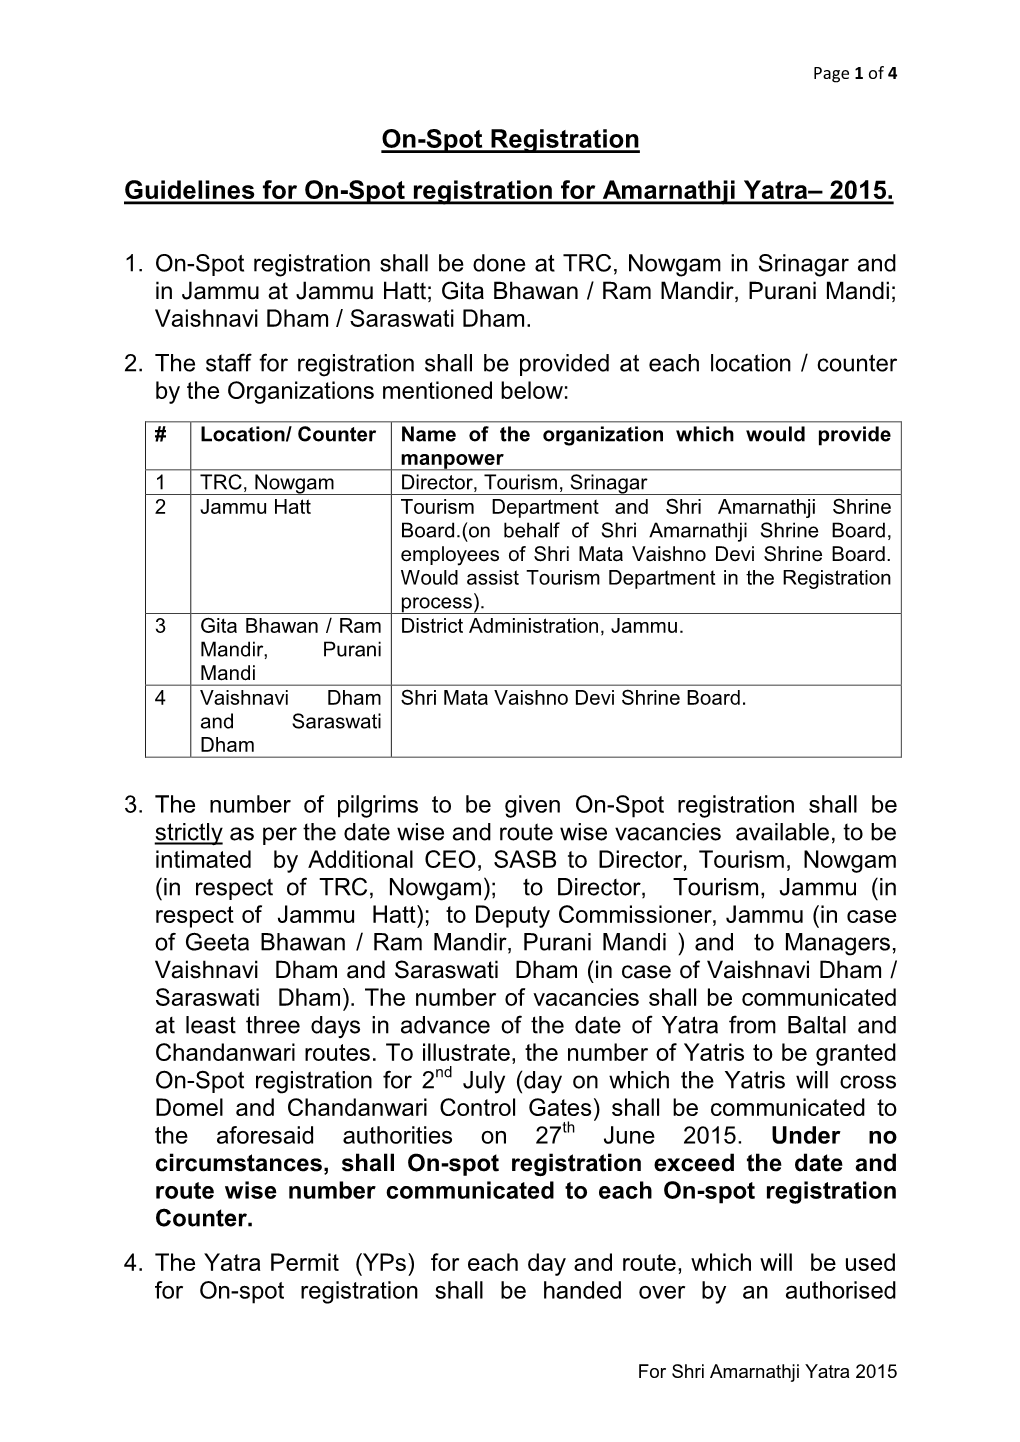 On-Spot Registration Guidelines for On-Spot Registration for Amarnathji Yatra– 2015